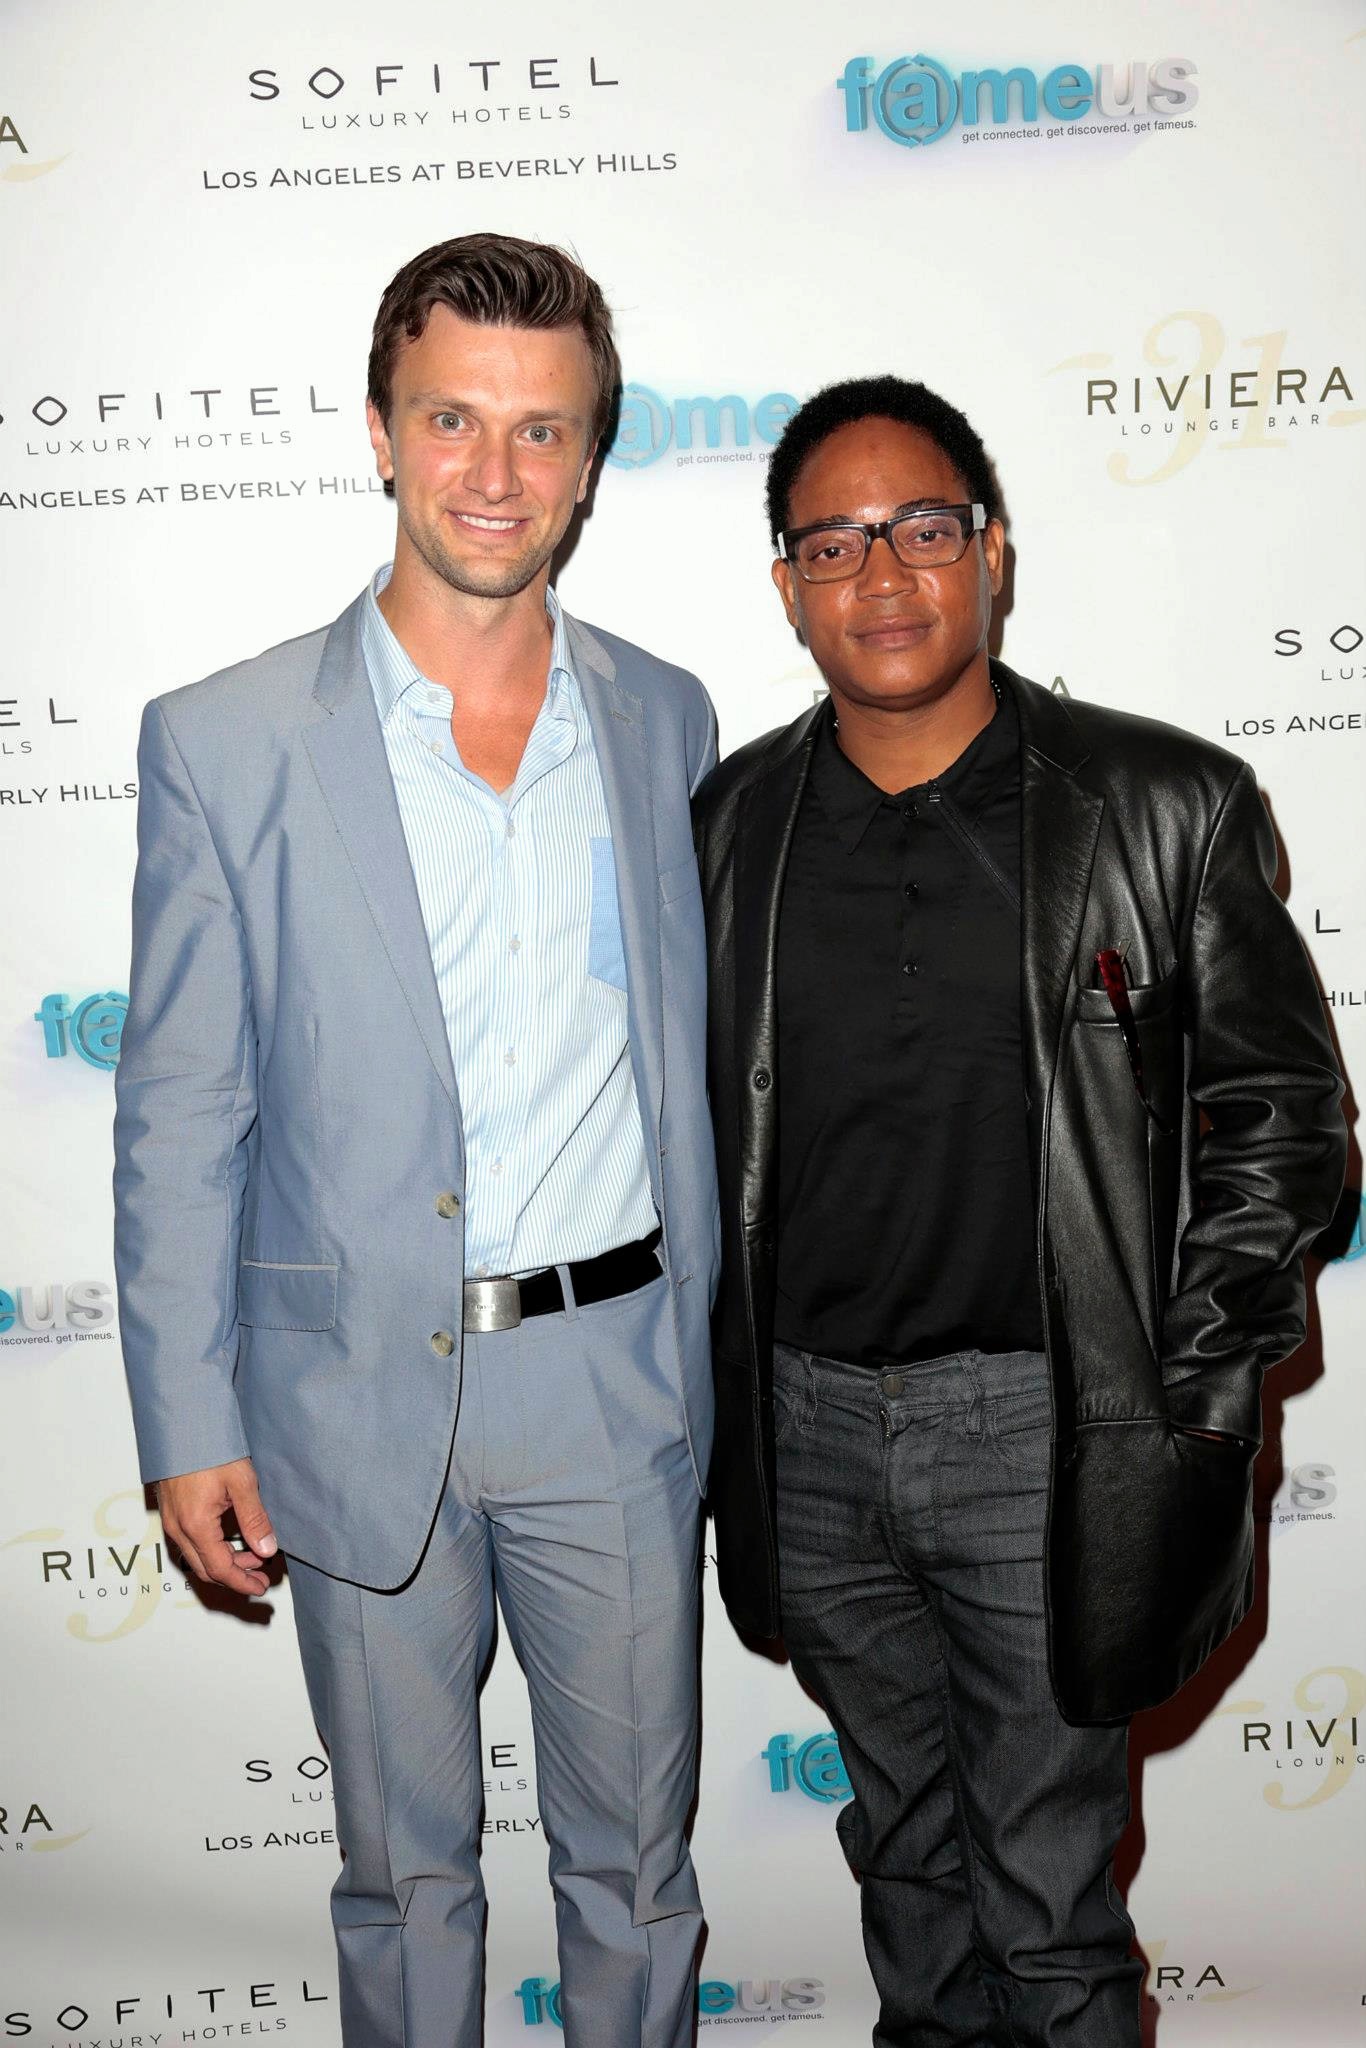 Kent Speakman & Patrick Cunningham, Fameus Launch Party - Sofitel Los Angeles at Beverly Hills